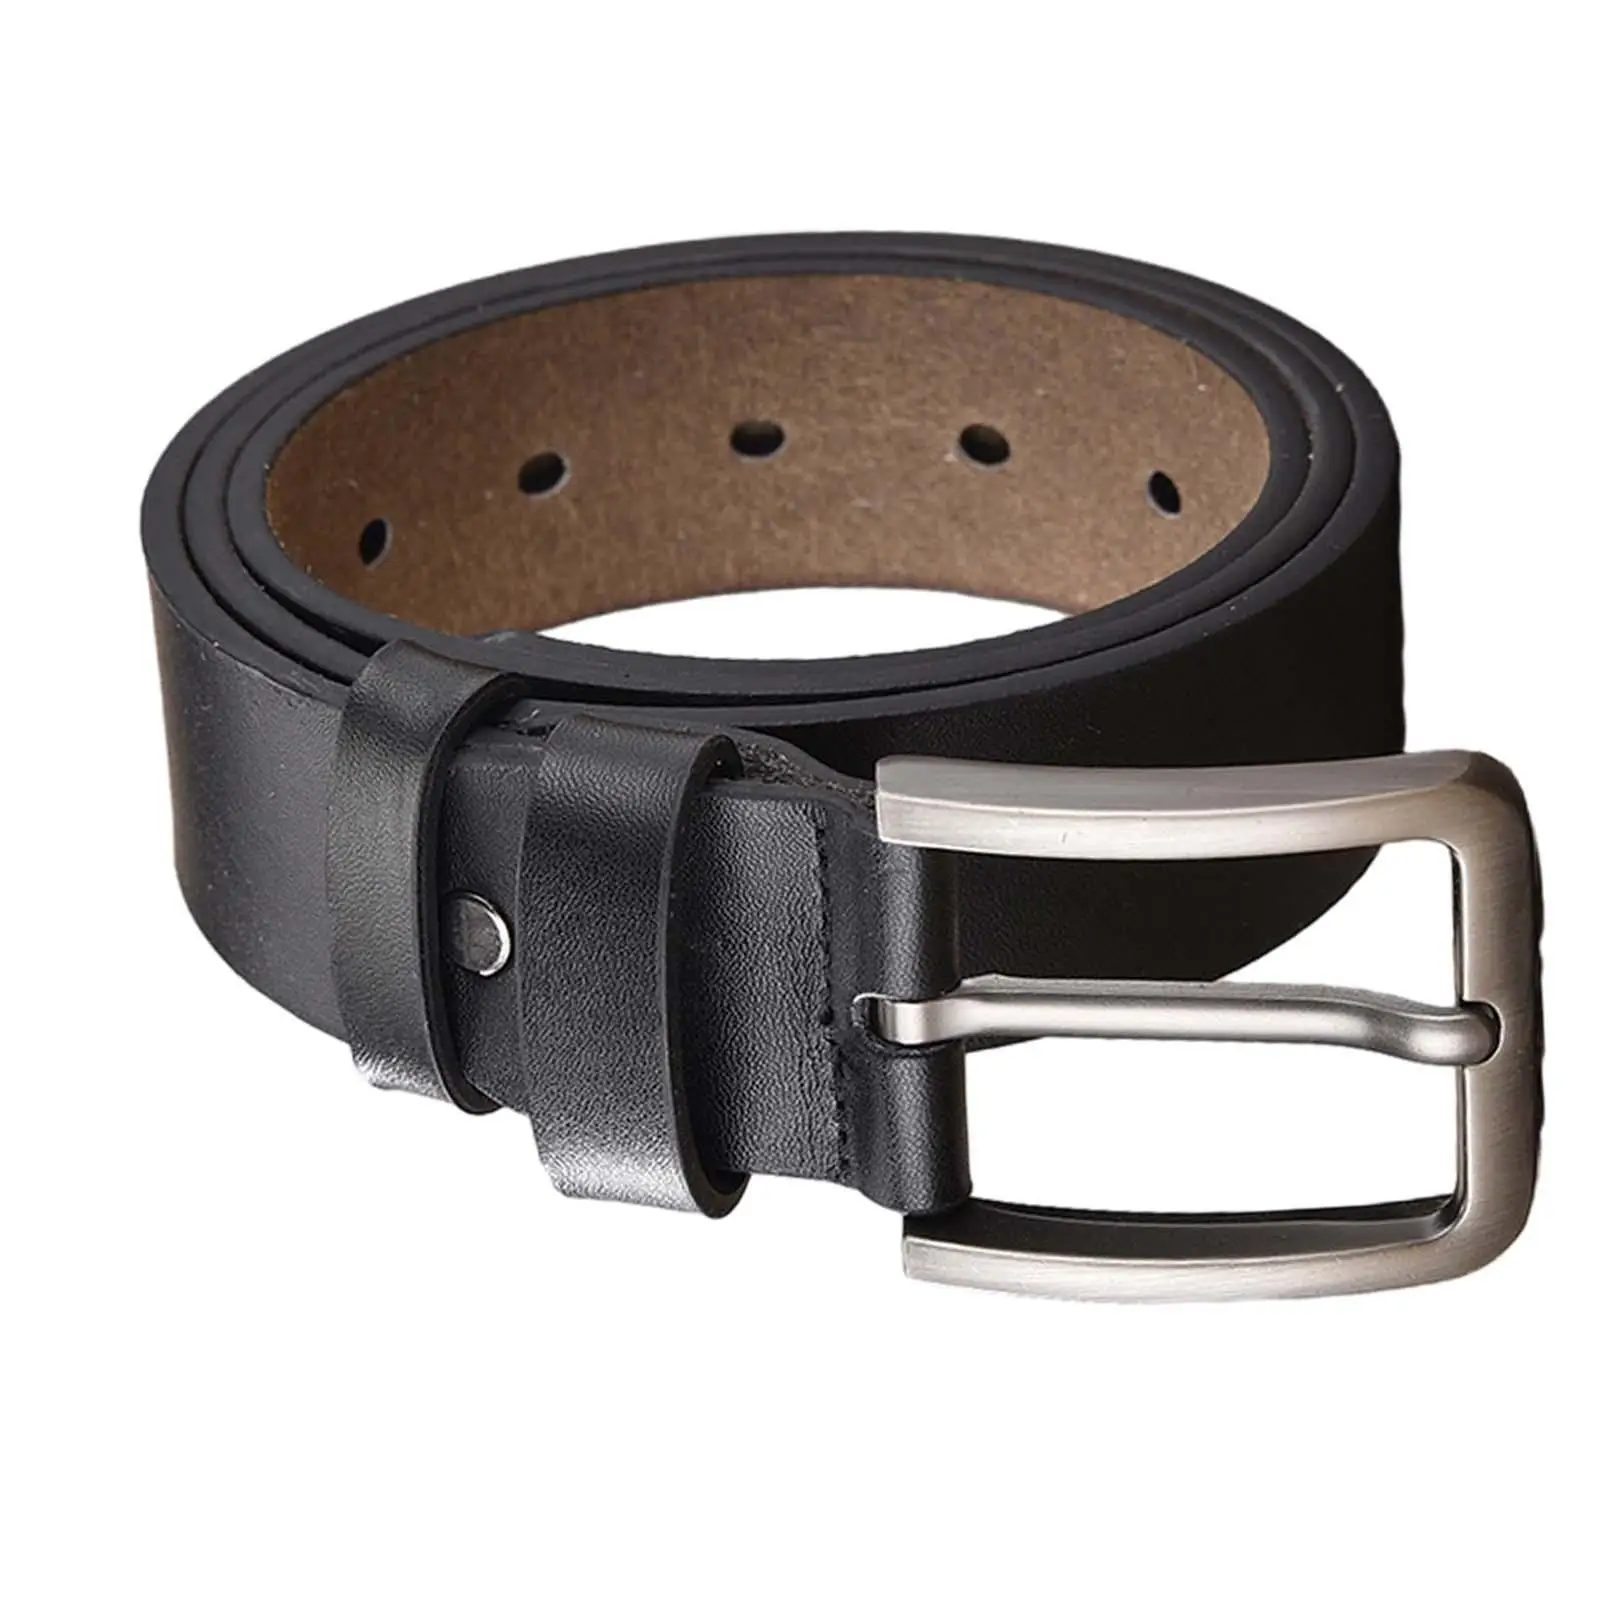 Men Belt PU Leather Belt Pin Buckle 47inch Long Adjustable Casual Waistband Waist Strap for Work Wedding Uniform Jeans Trousers